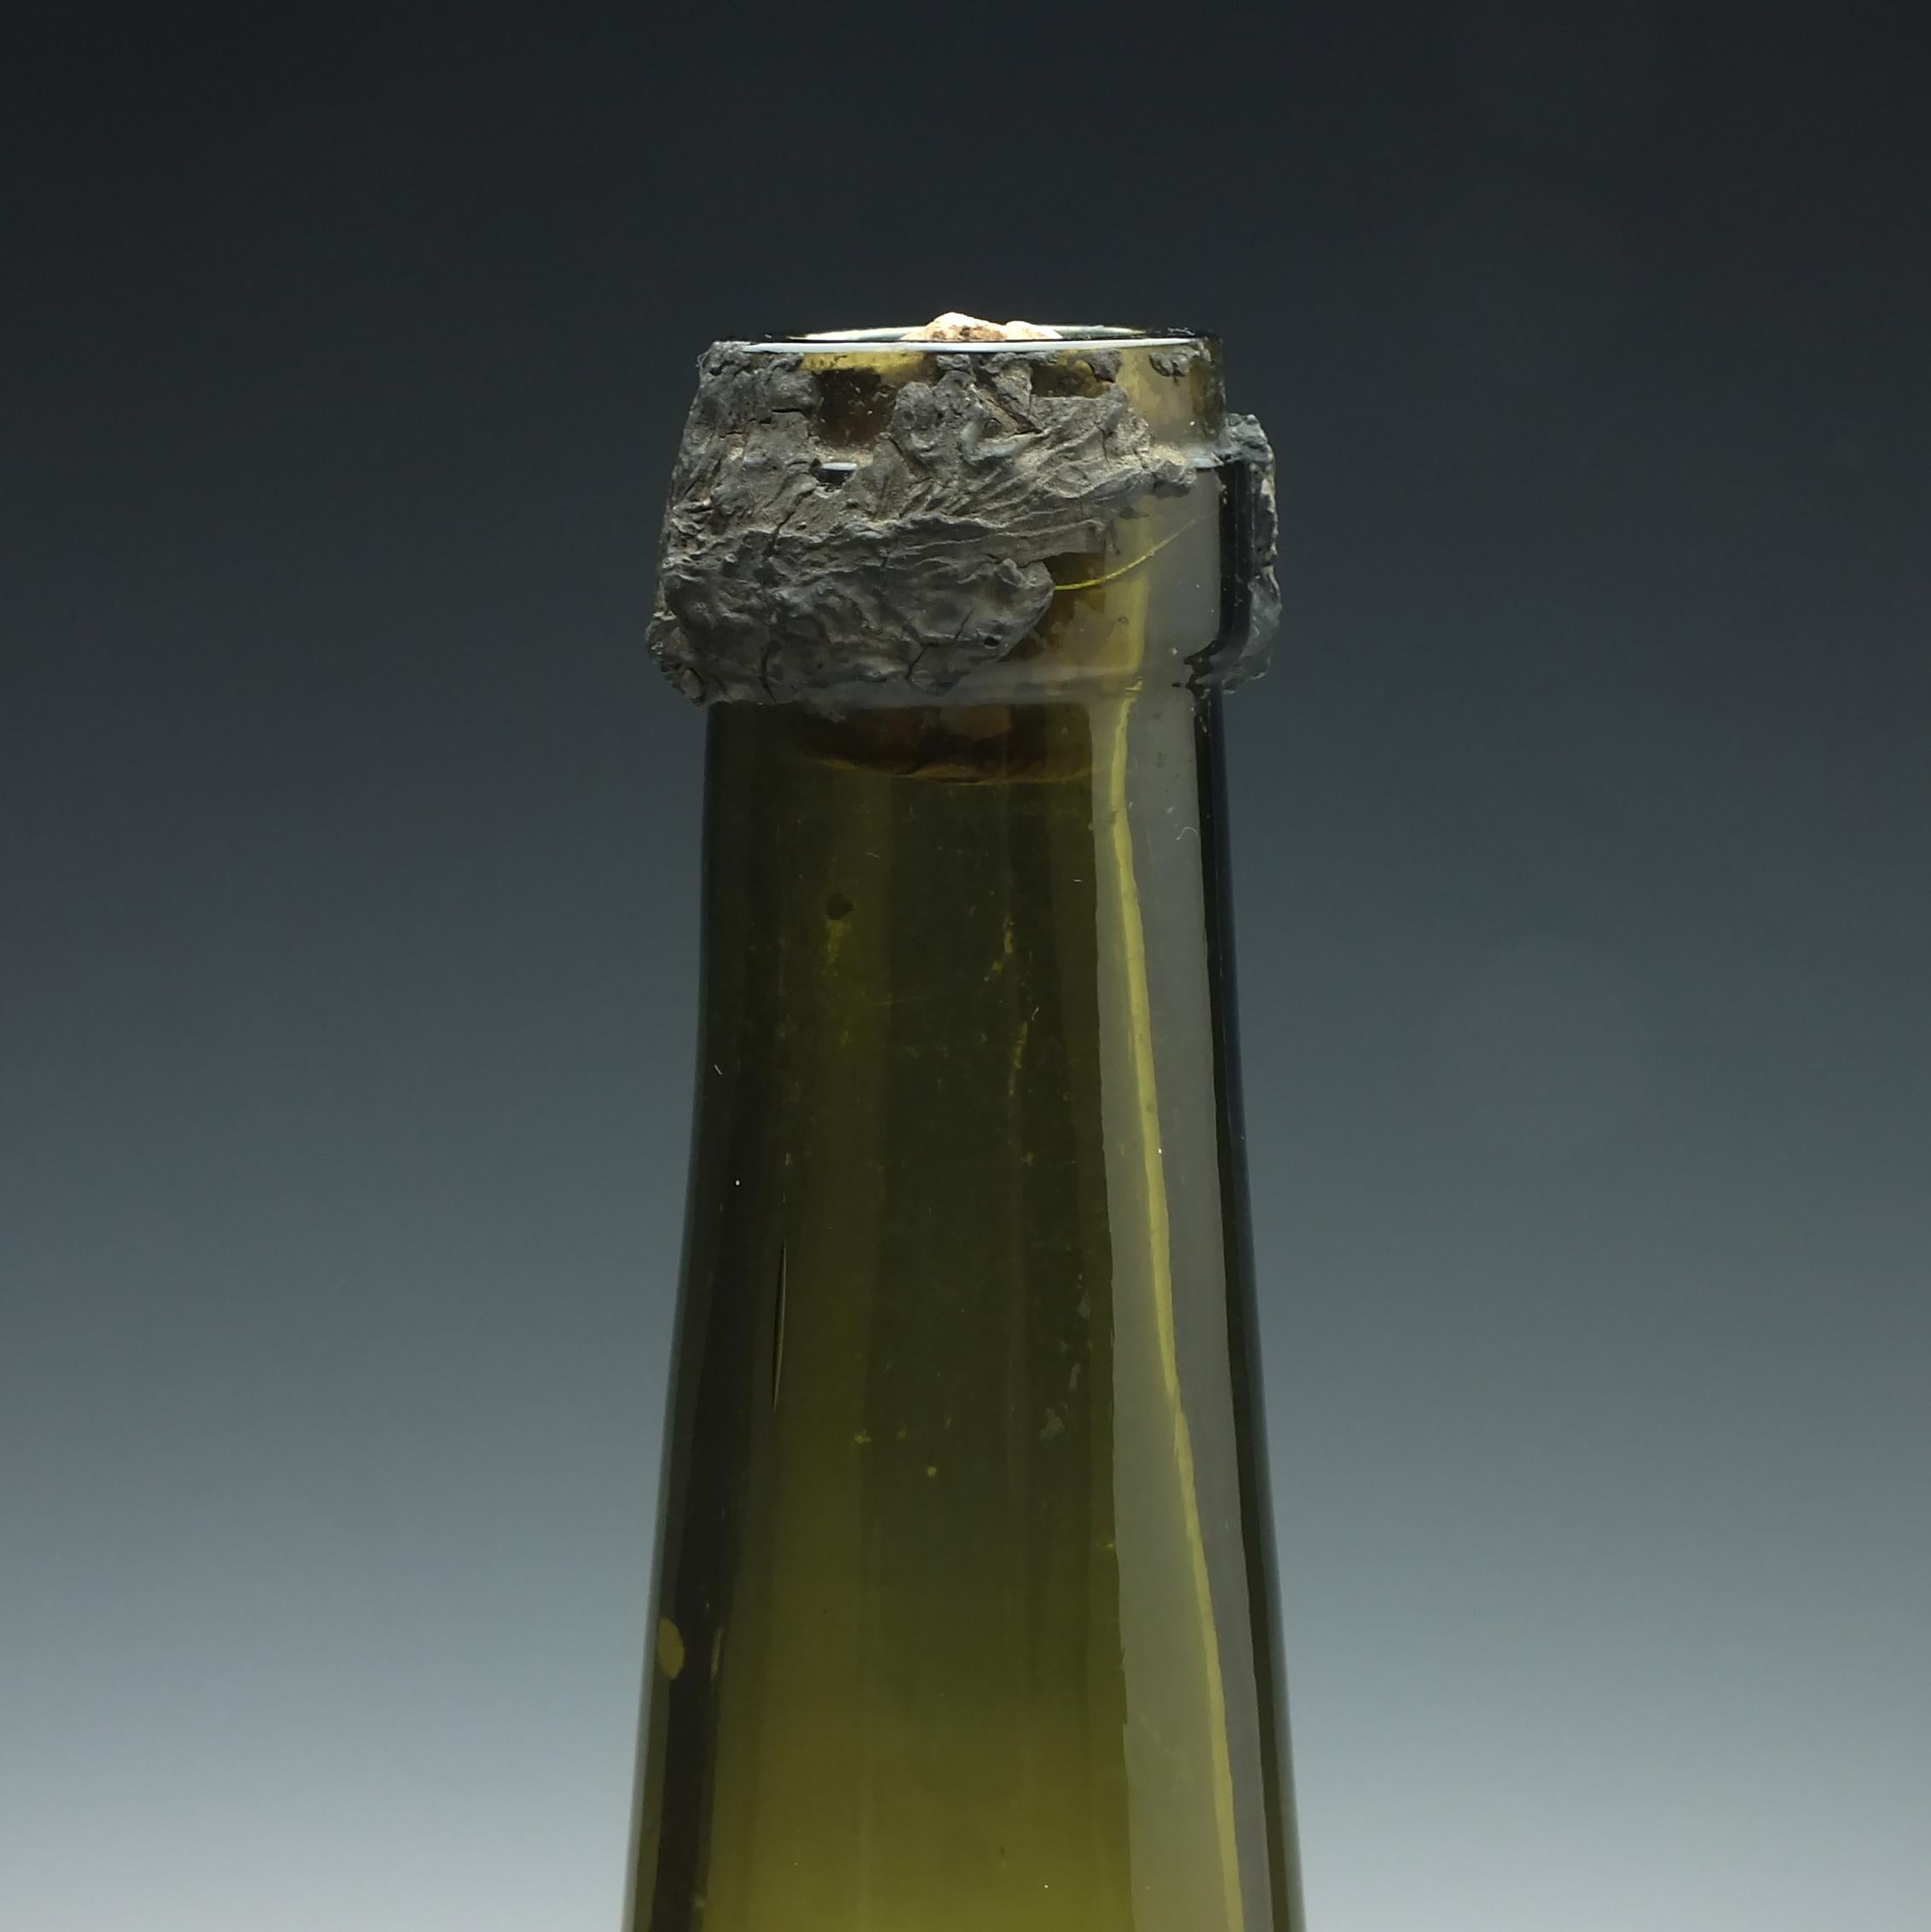 19th century wine bottle